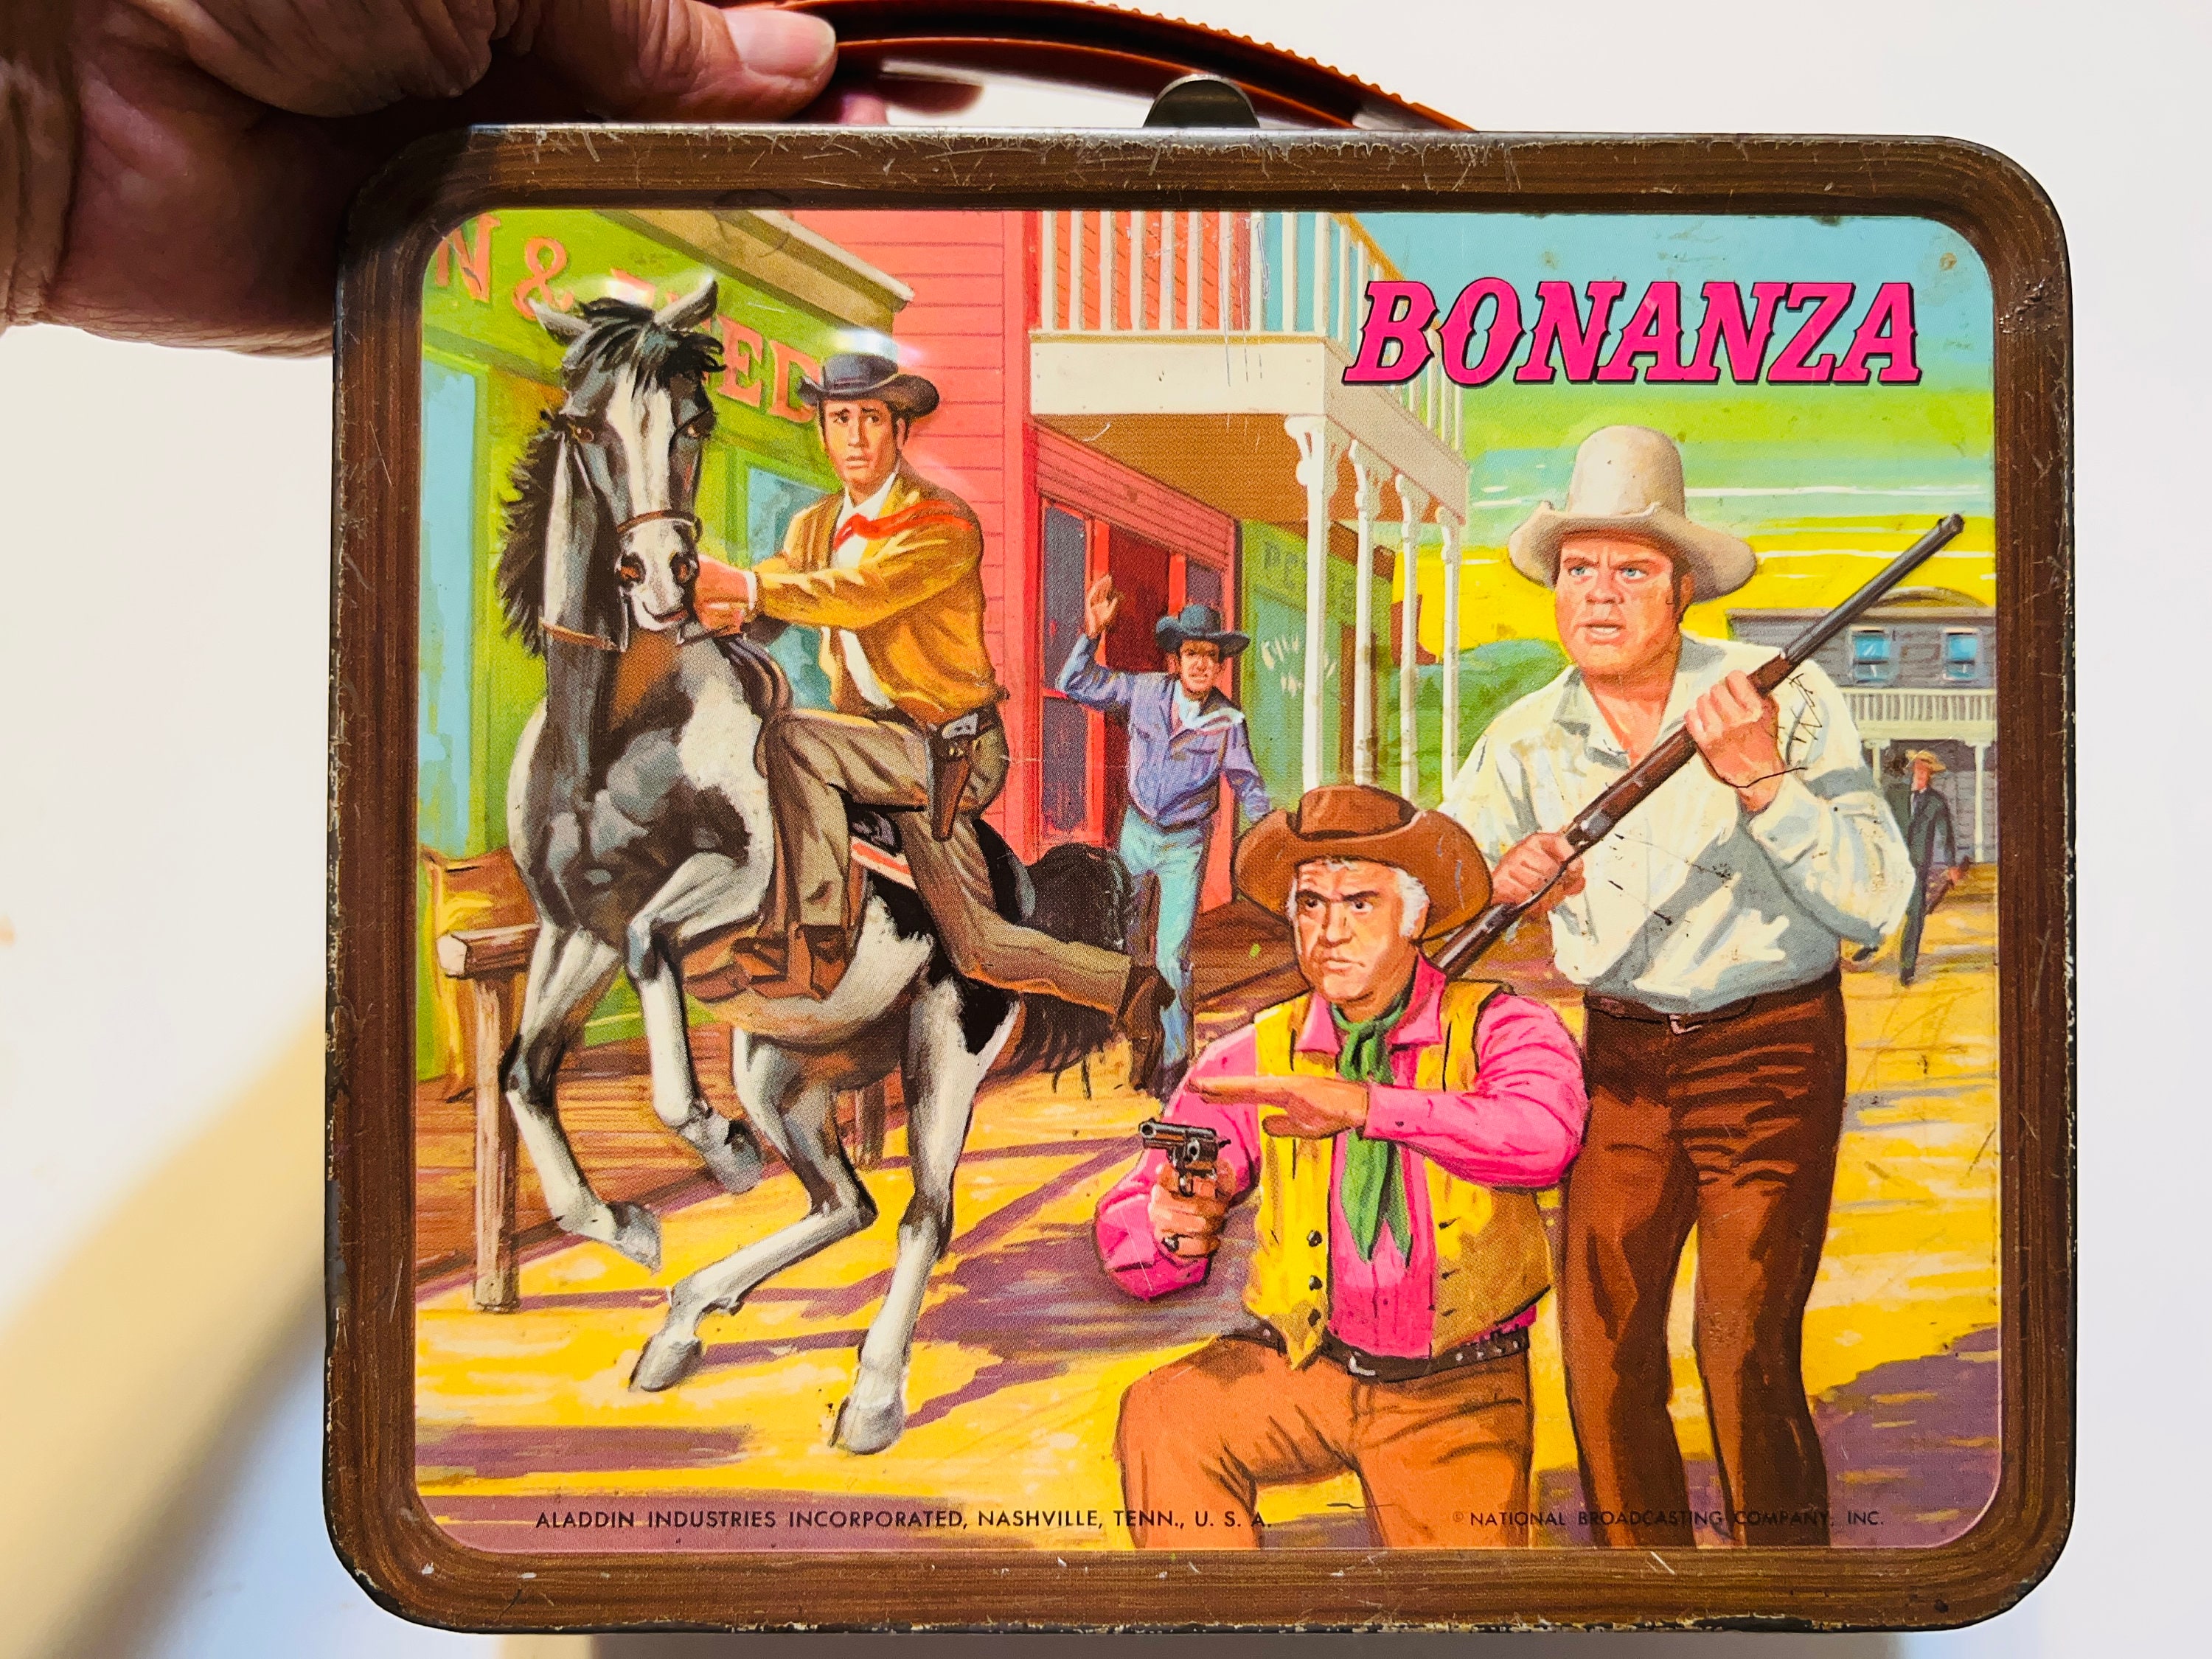 Moana, Vintage Island Girl Metal Lunch Box